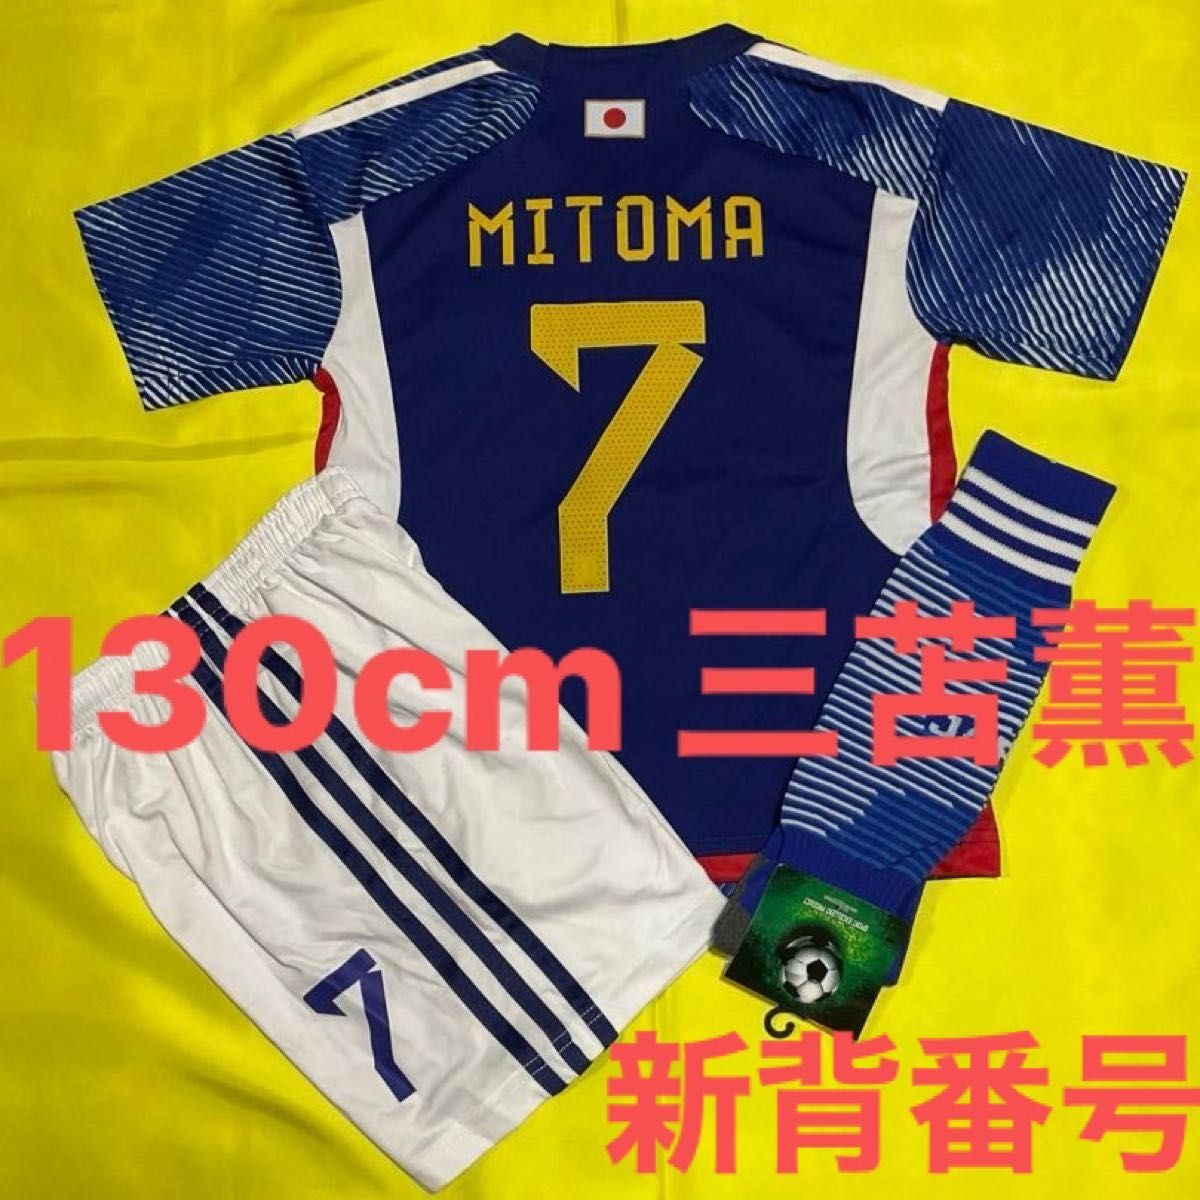 130cm 日本代表 7番 三苫薫 子供サッカーユニフォーム ソックスセット キッズ